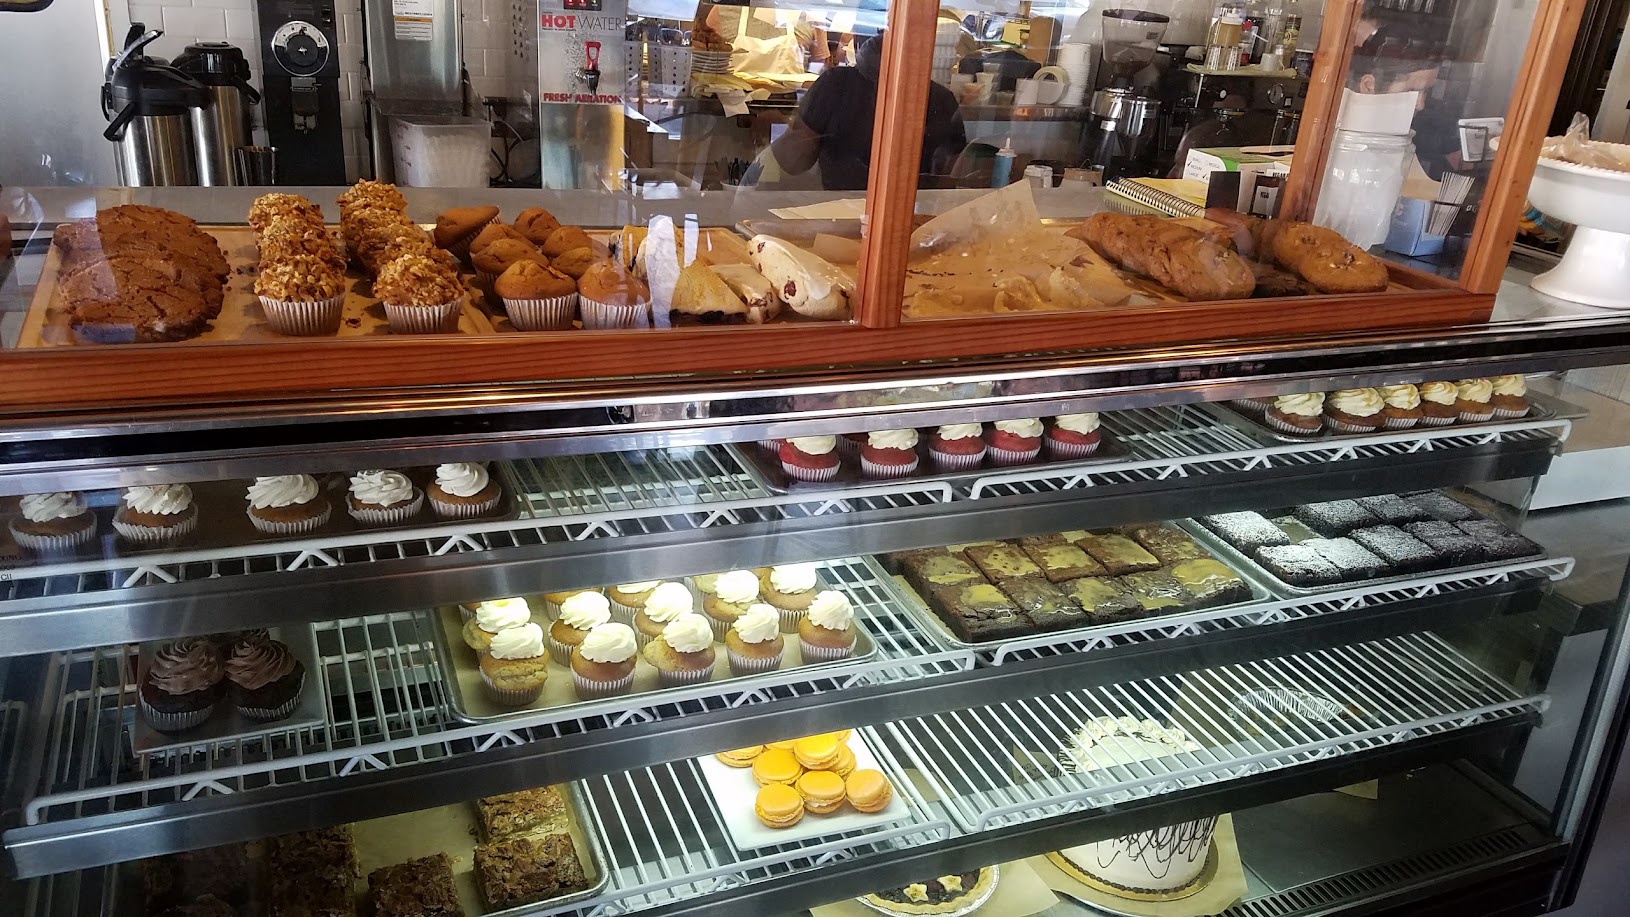 Jewel's Bakery & Cafe